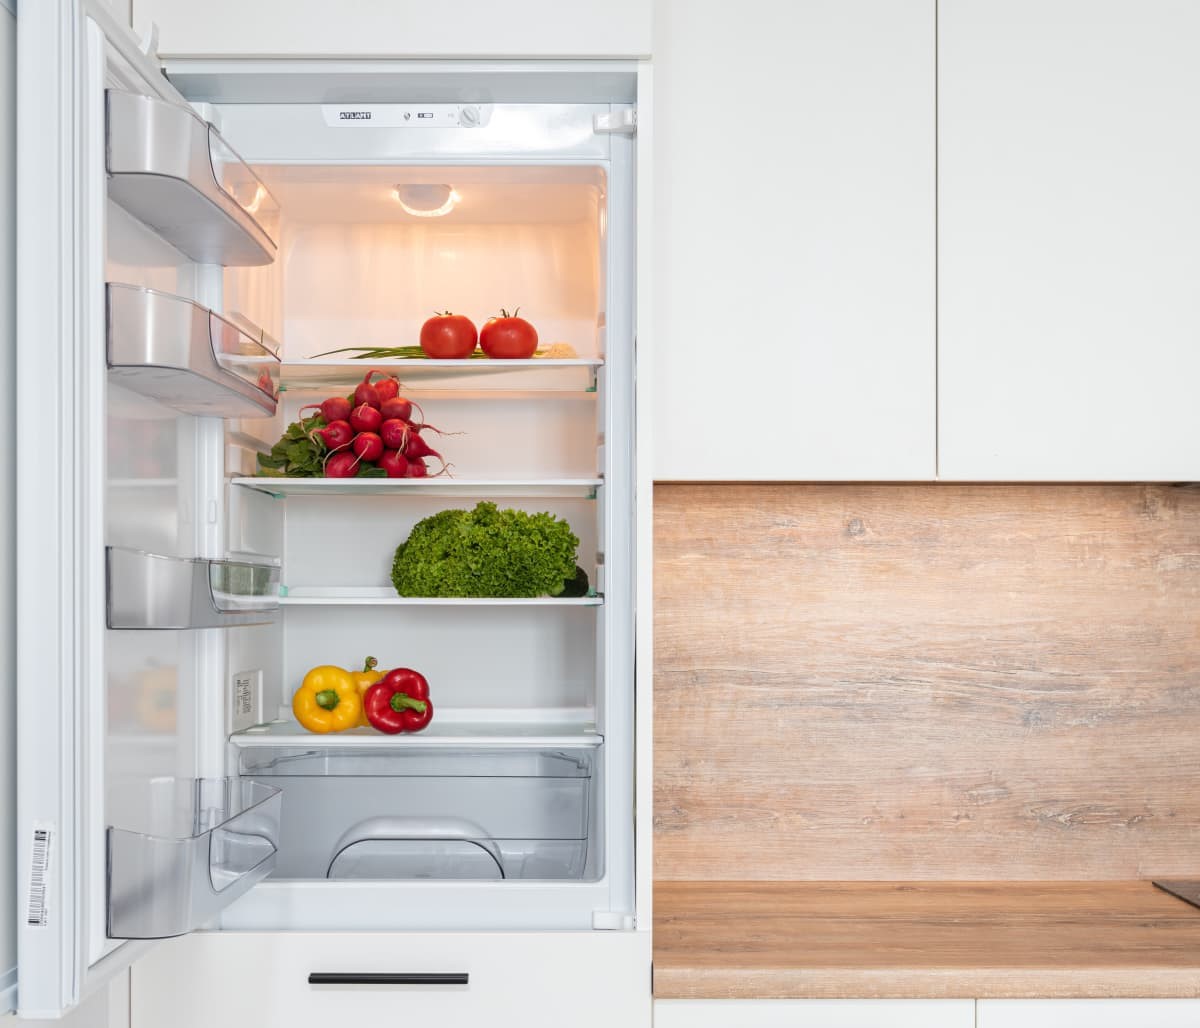 How Refrigerator Works